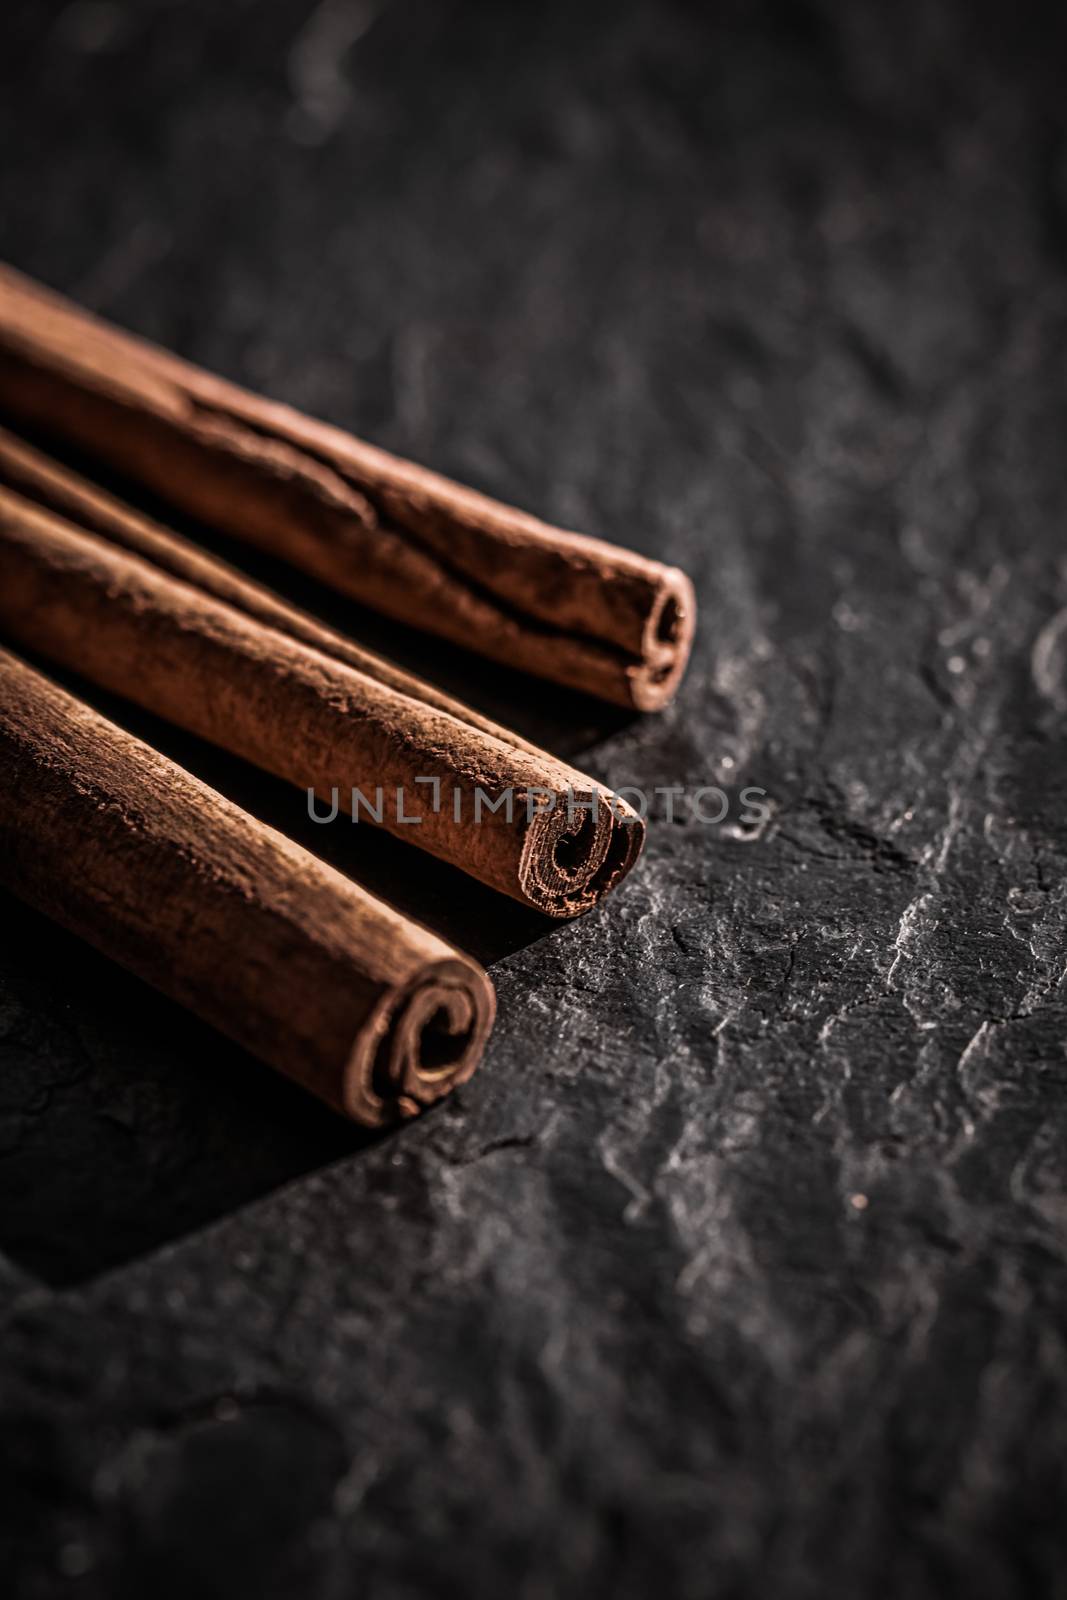 Cinnamon sticks on black stone background, food recipe by Anneleven